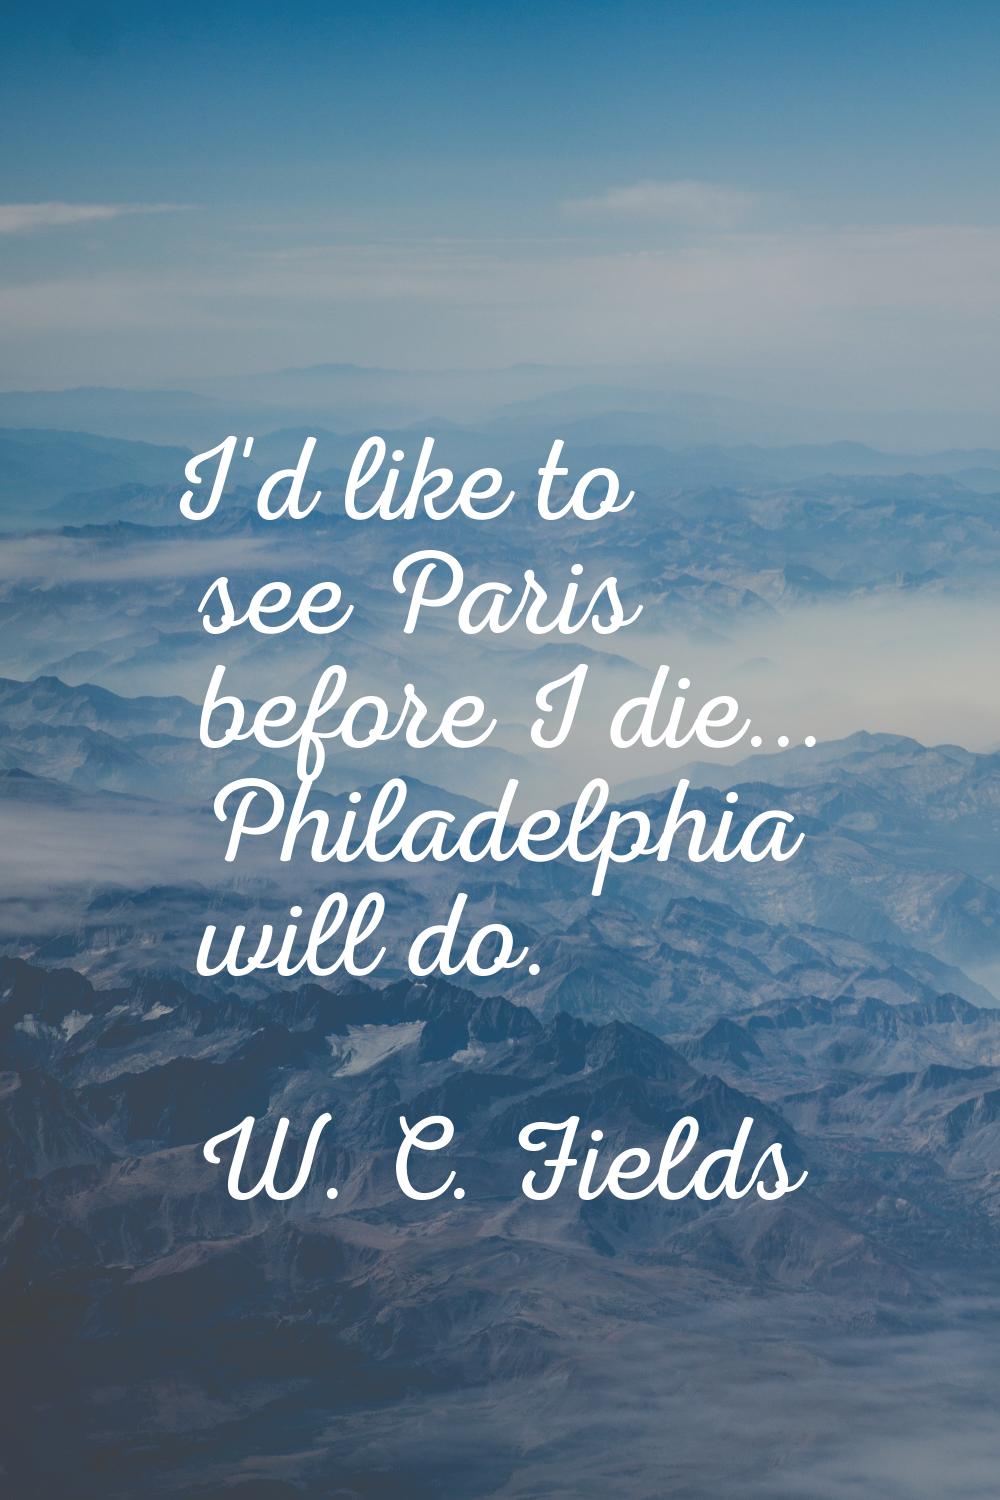 I'd like to see Paris before I die... Philadelphia will do.